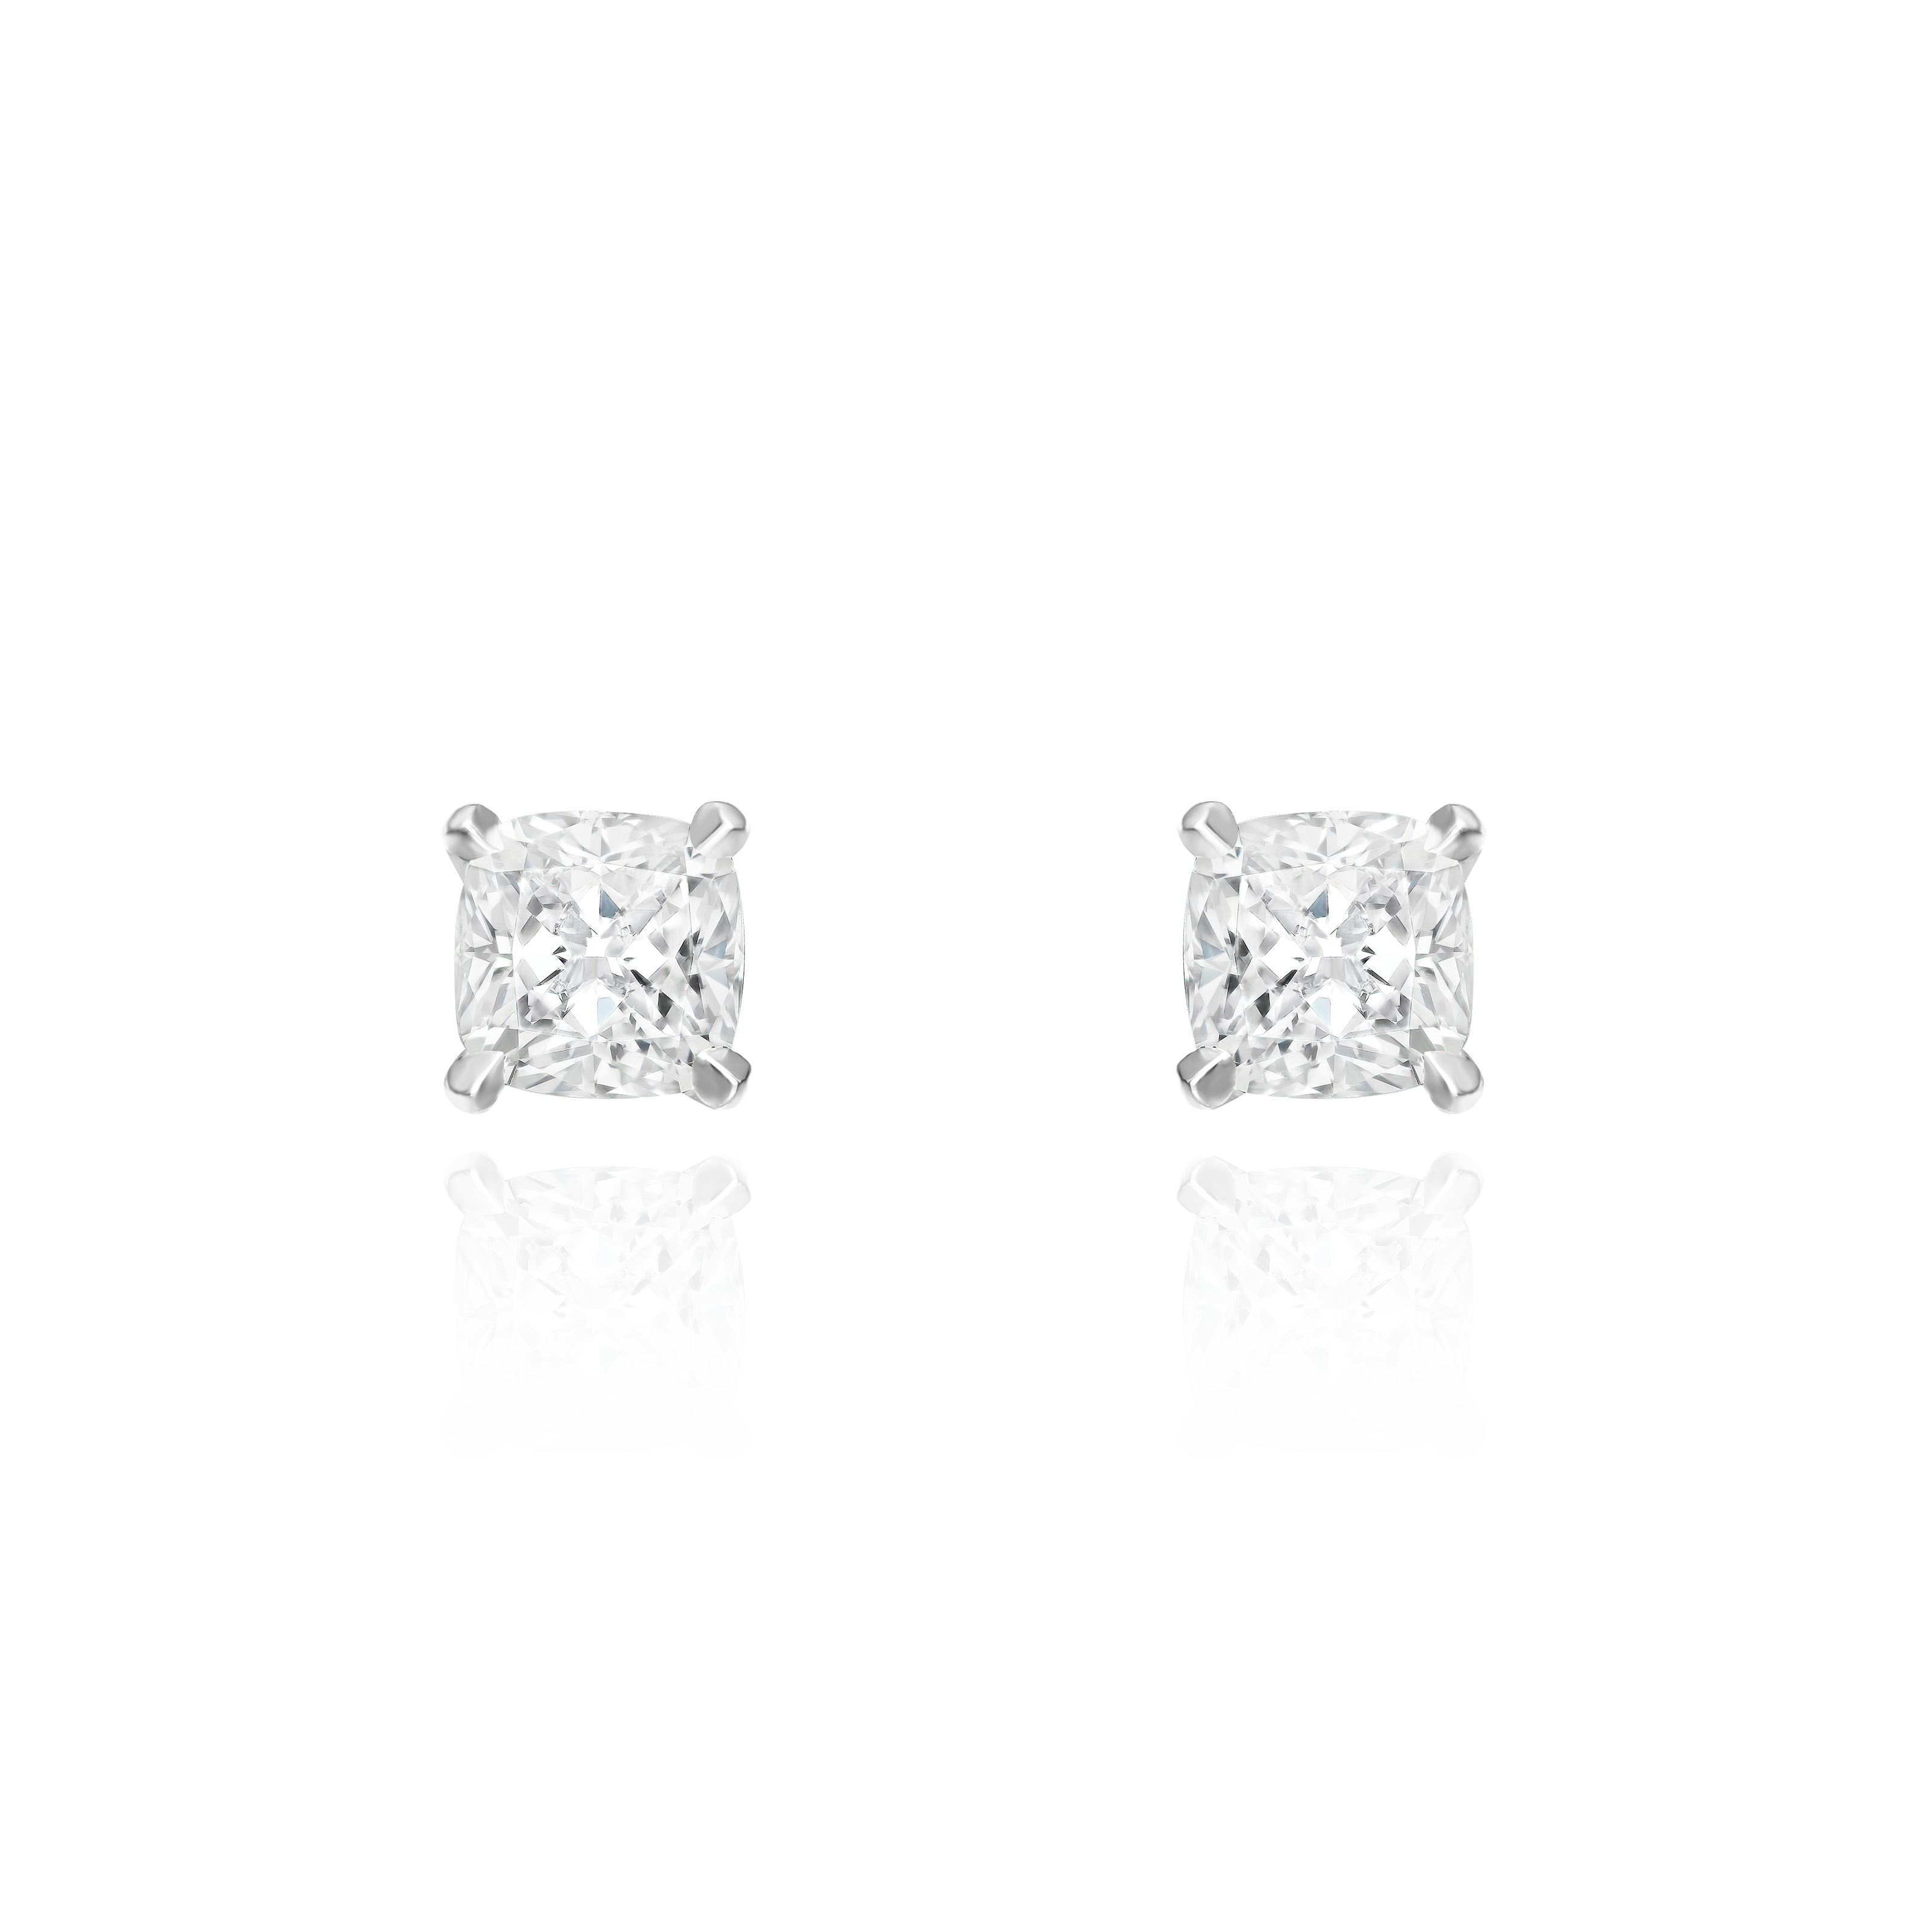 1.43cts Square Cushion Cut Diamond Earrings